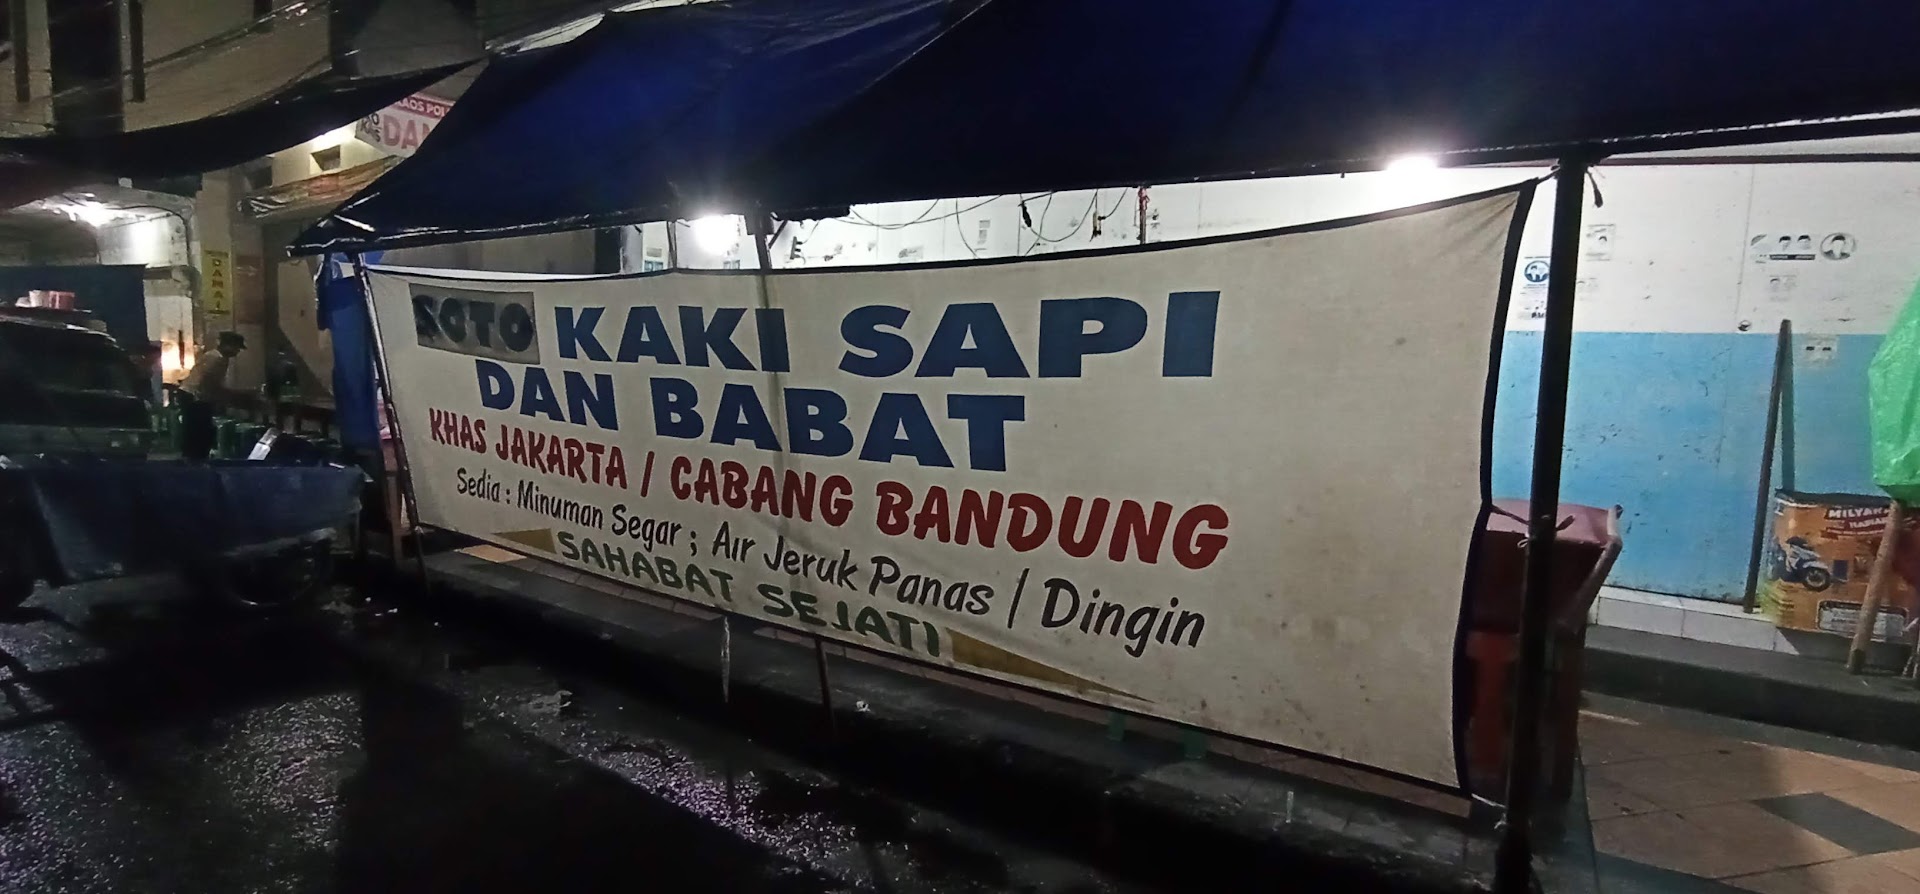 Gambar Soto Kaki Sapi Dan Babat Khas Jakarta